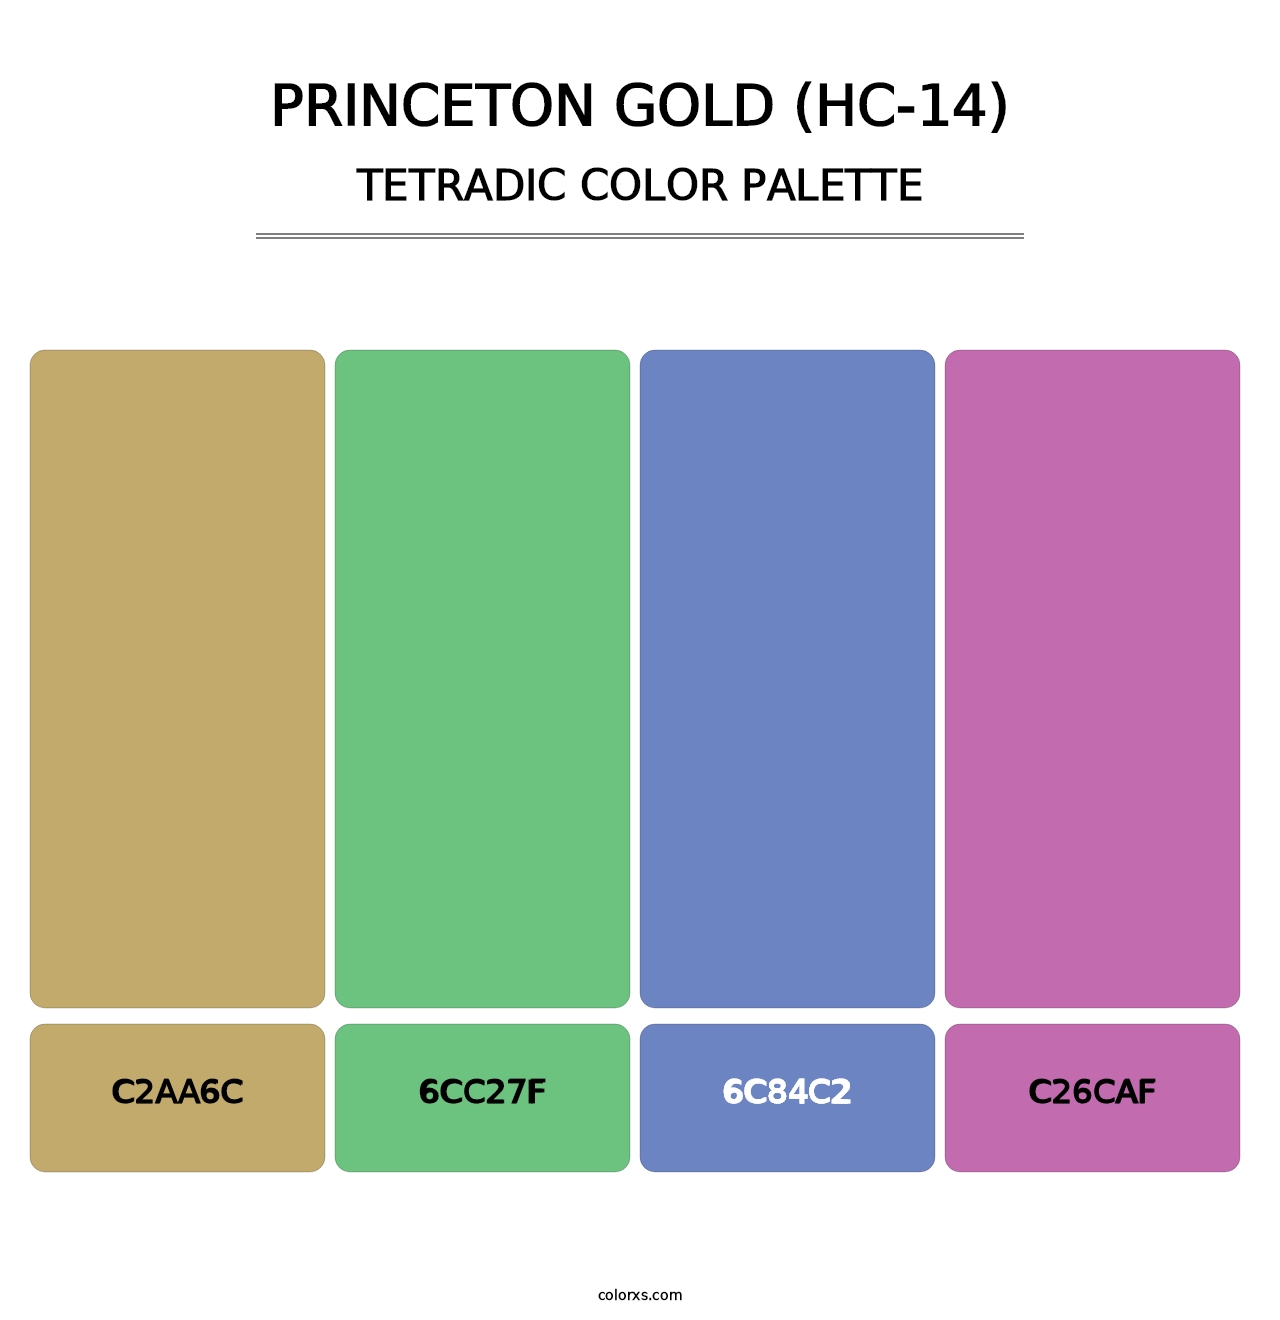 Princeton Gold (HC-14) - Tetradic Color Palette